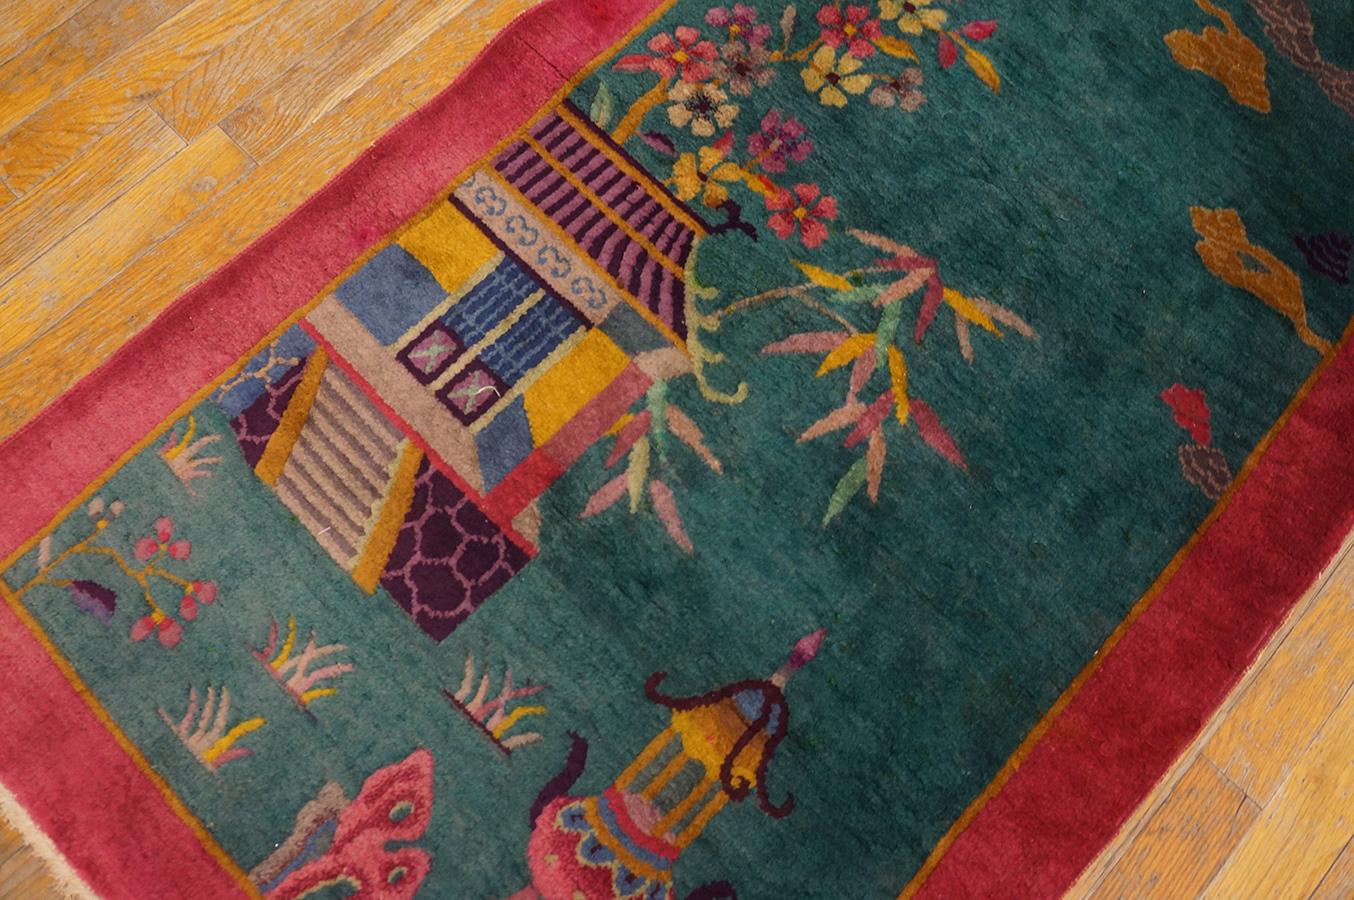 1920s Chinese Art Deco Carpet ( 2' 6'' x 4' 5'' - 76 x 134 cm ) For Sale 2